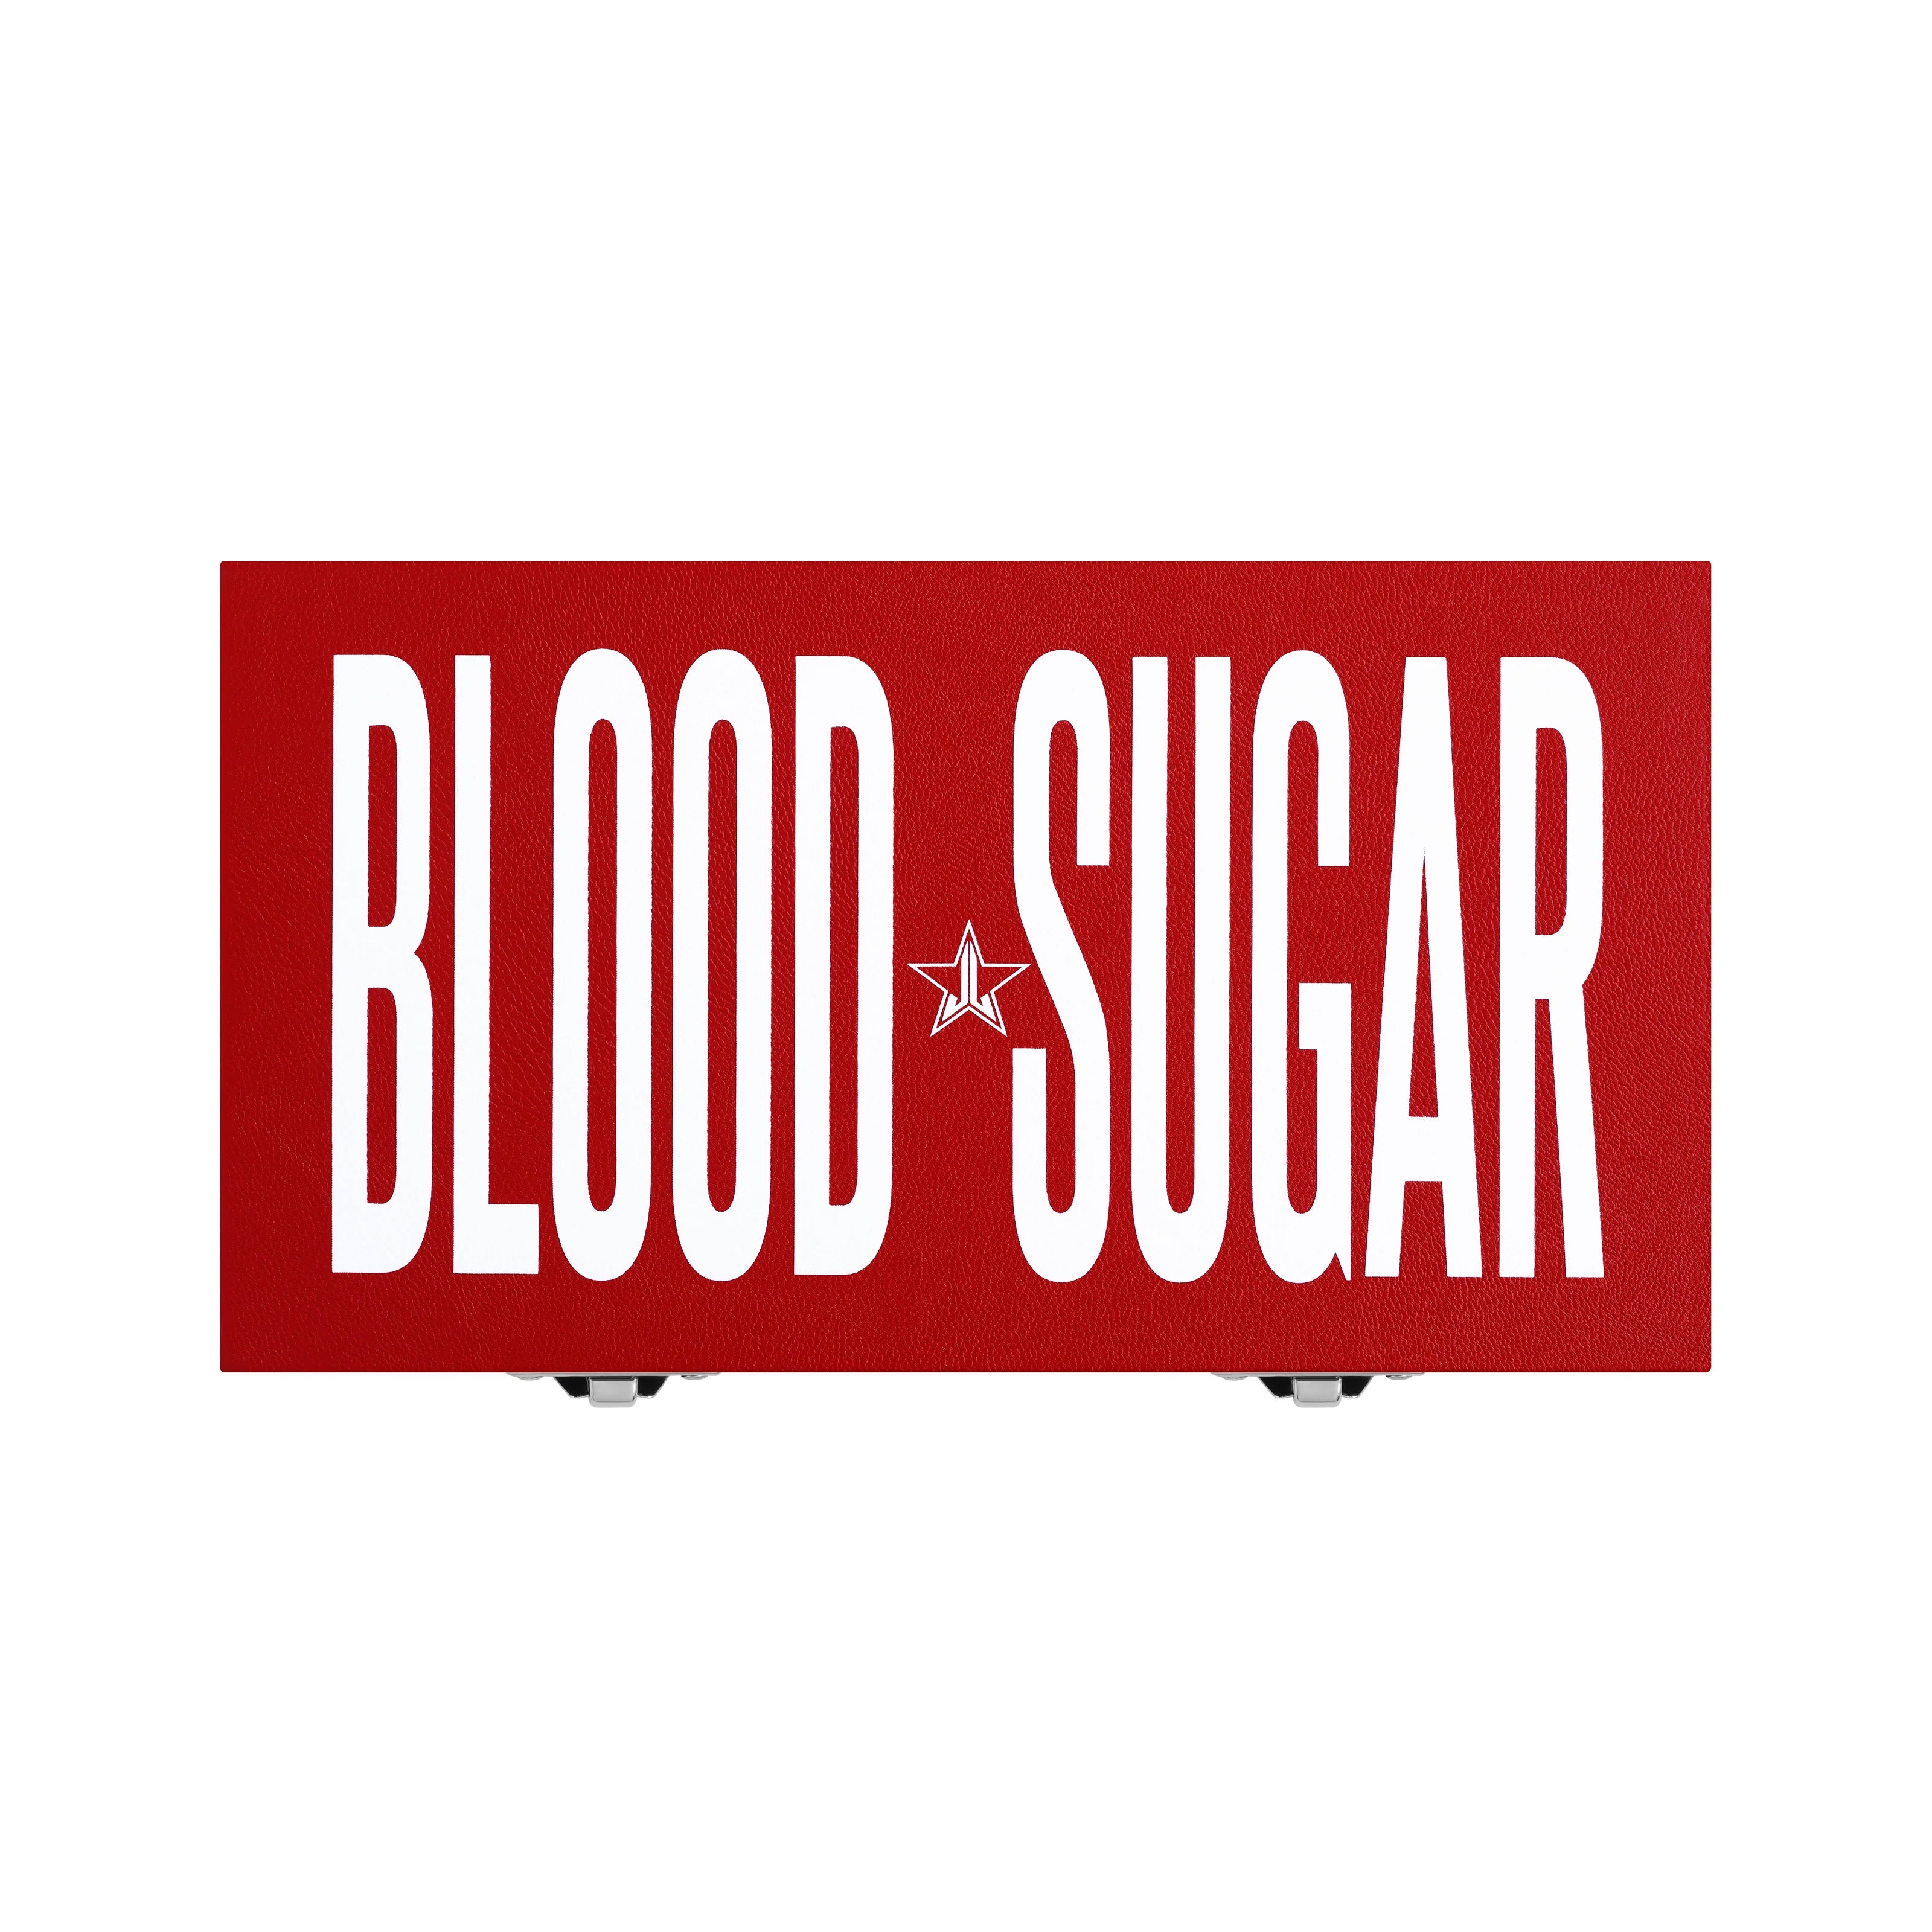 Blood Sugar Palette (espejo despegado)